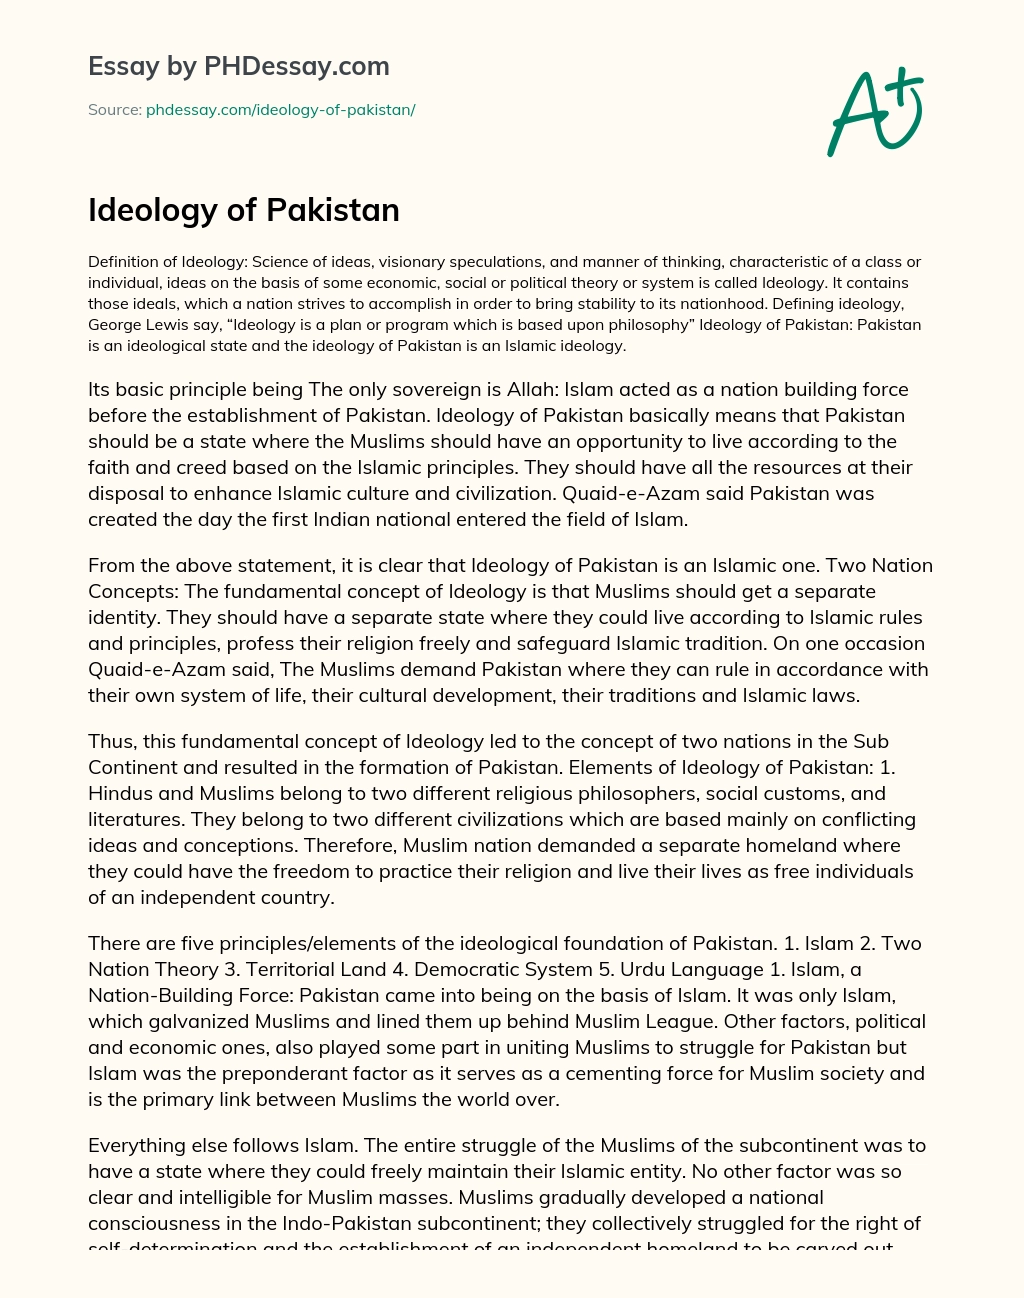 Ideology of Pakistan essay